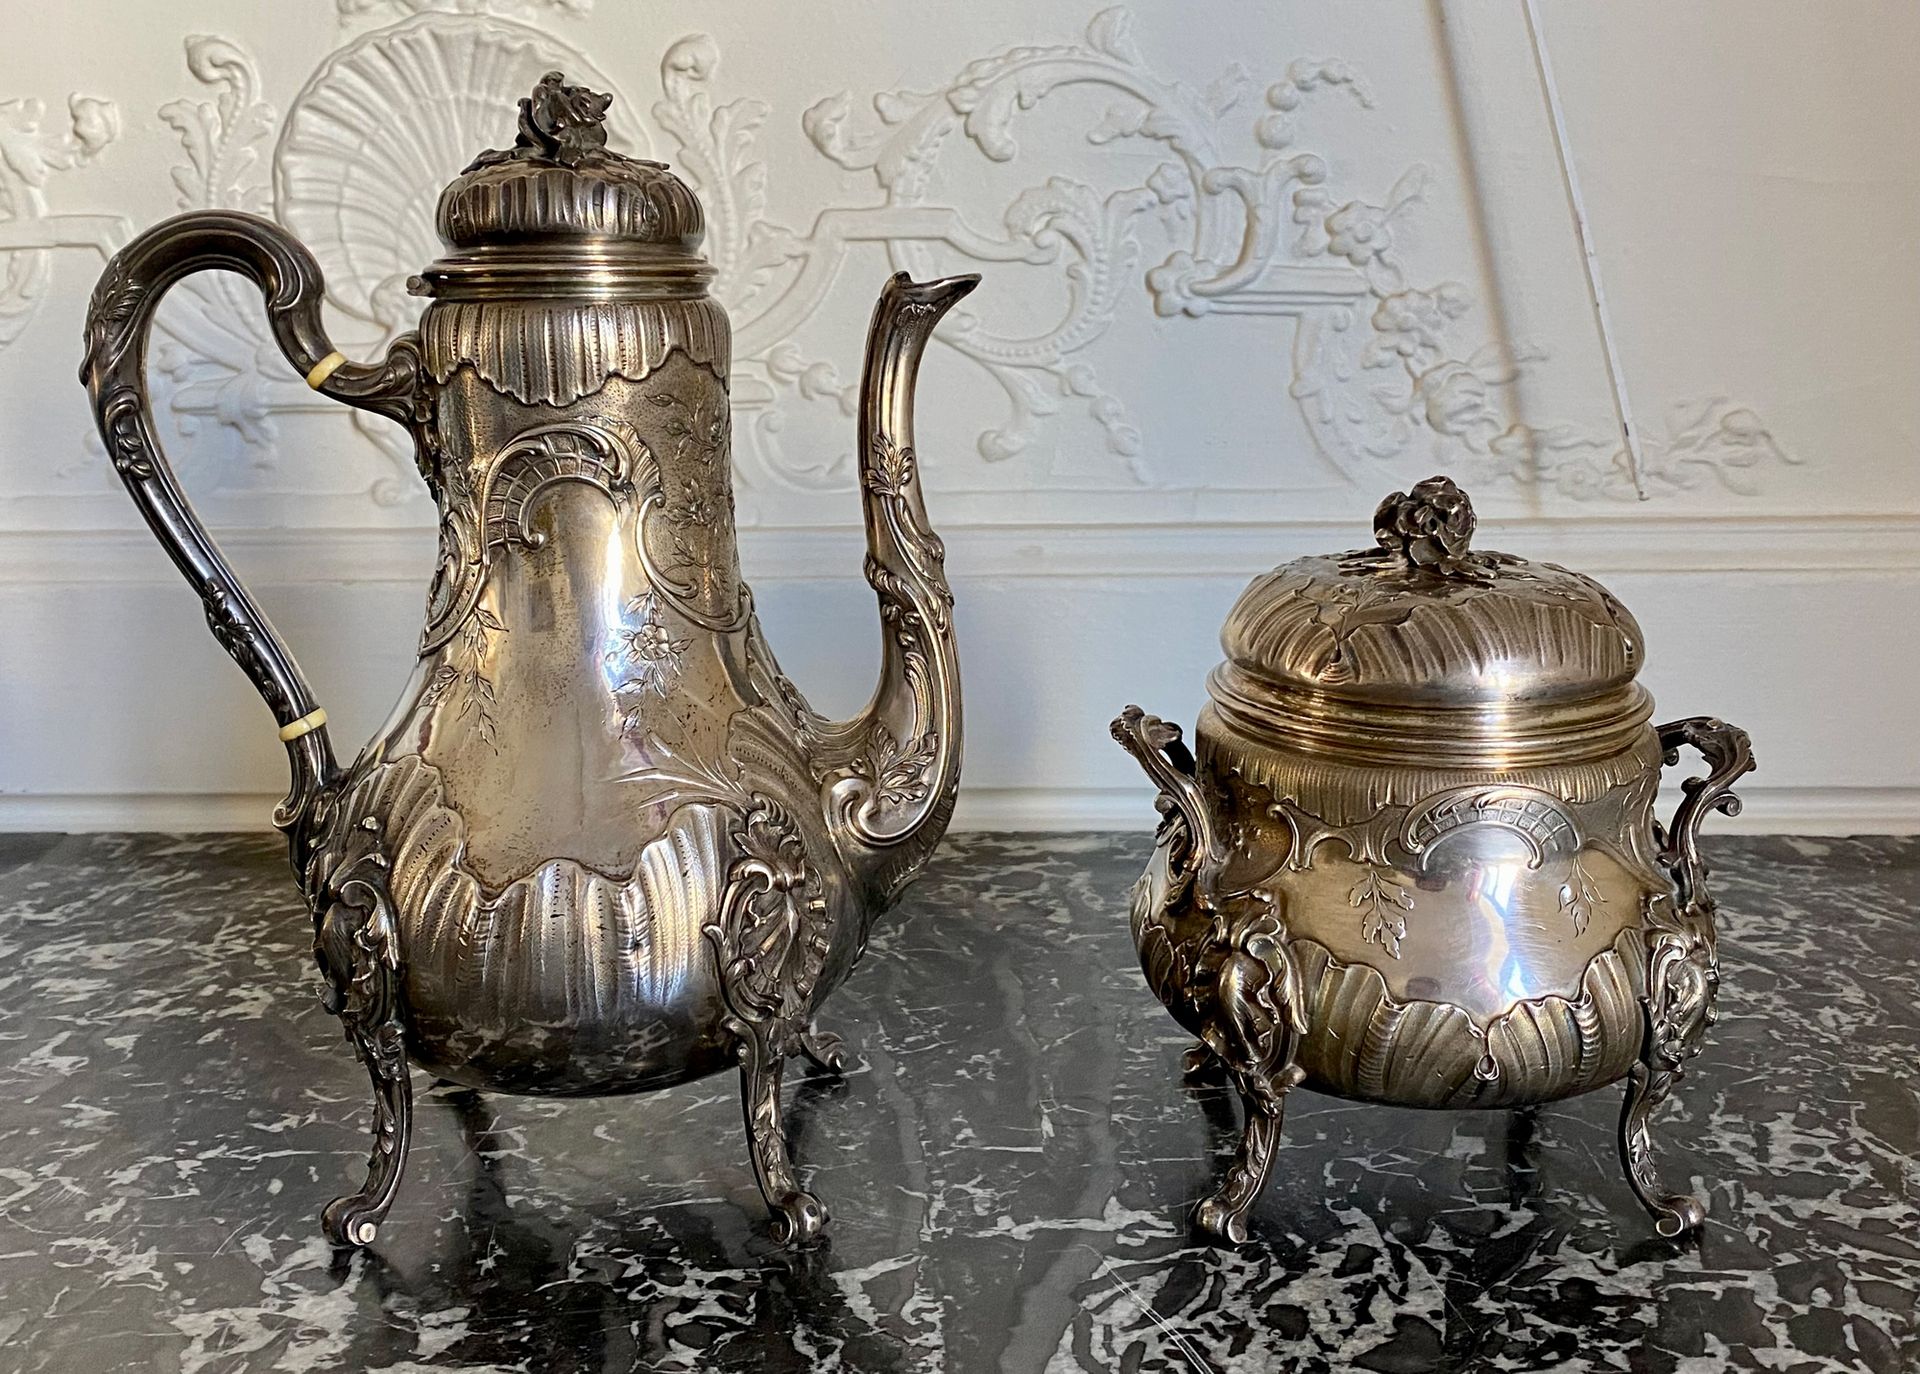 Null 银质凹凸纹茶壶和糖碗，有花卉装饰。米诺尔印记：TETARD 总重量：1320克